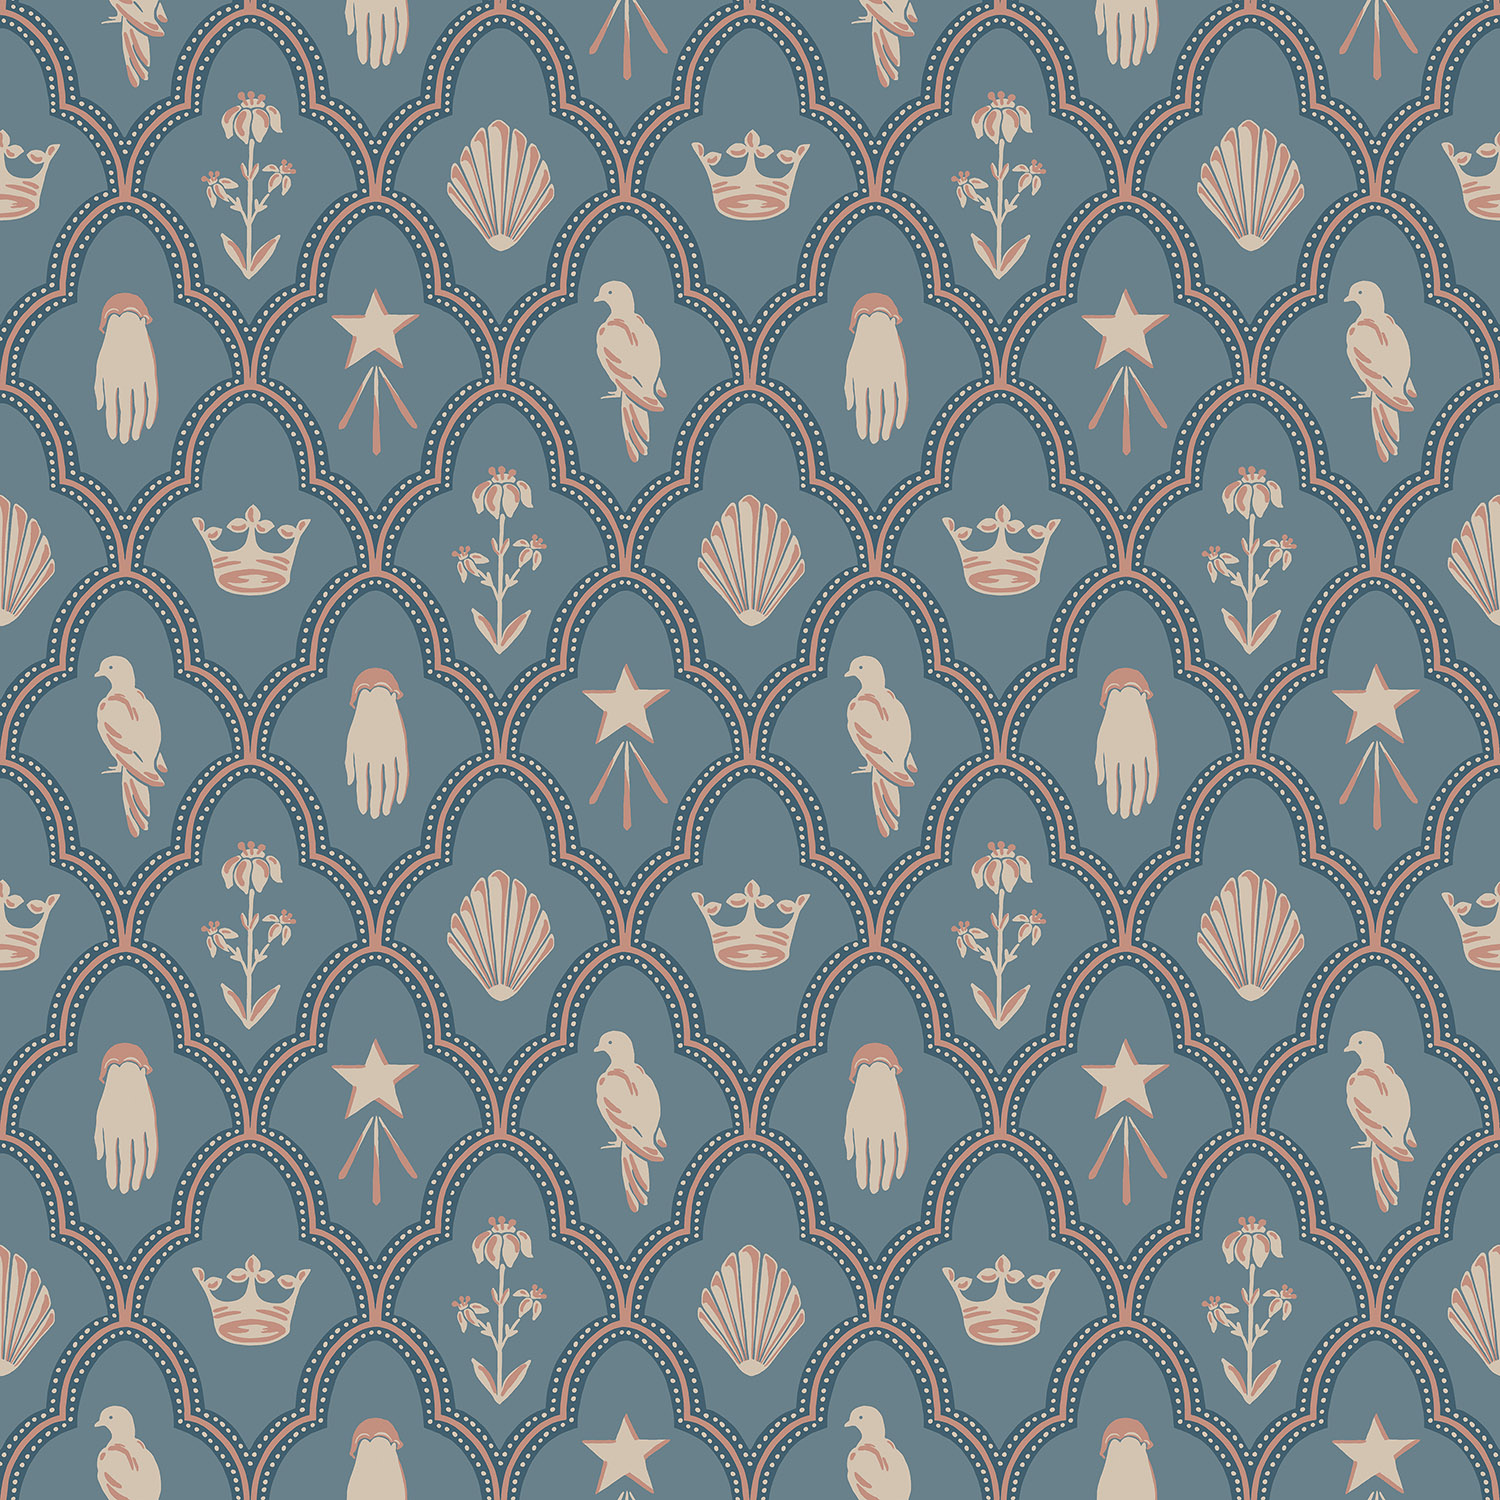 images/productimages/small/s10272-turtledove-barn-indigo-blue-sandberg-wallpaper-product.jpg